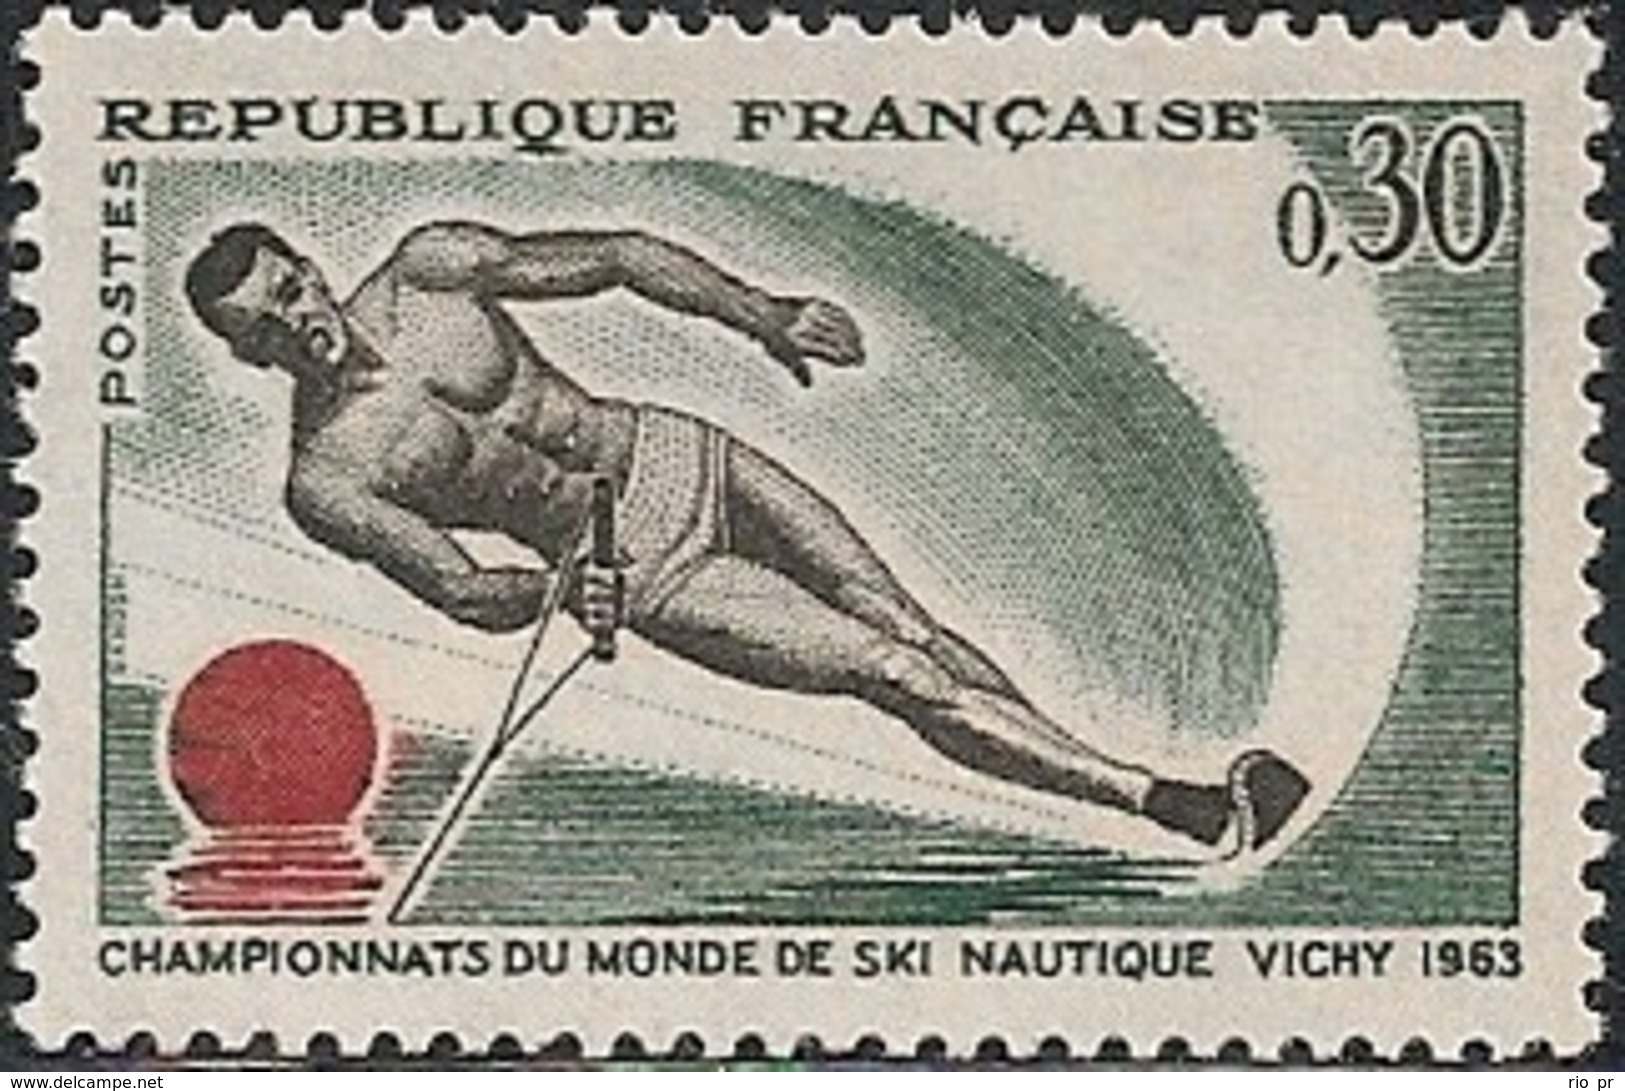 FRANCE - WORLD WATER-SKIING CHAMPIONSHIPS, VICHY 1963 - MNH - Waterski